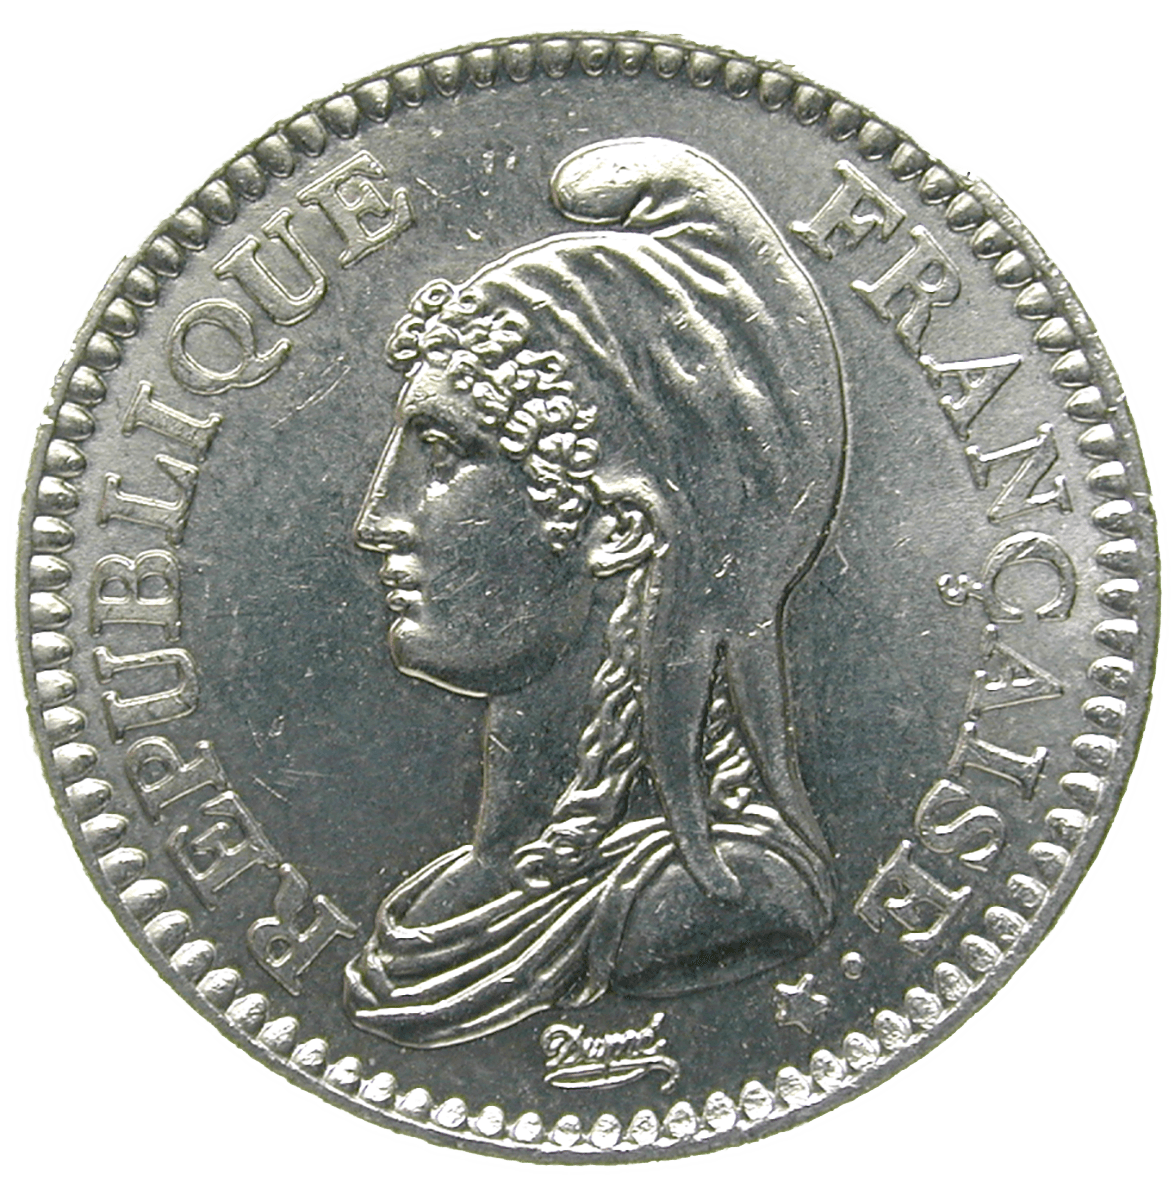 Republic of France, 1 Franc 1992 (obverse)